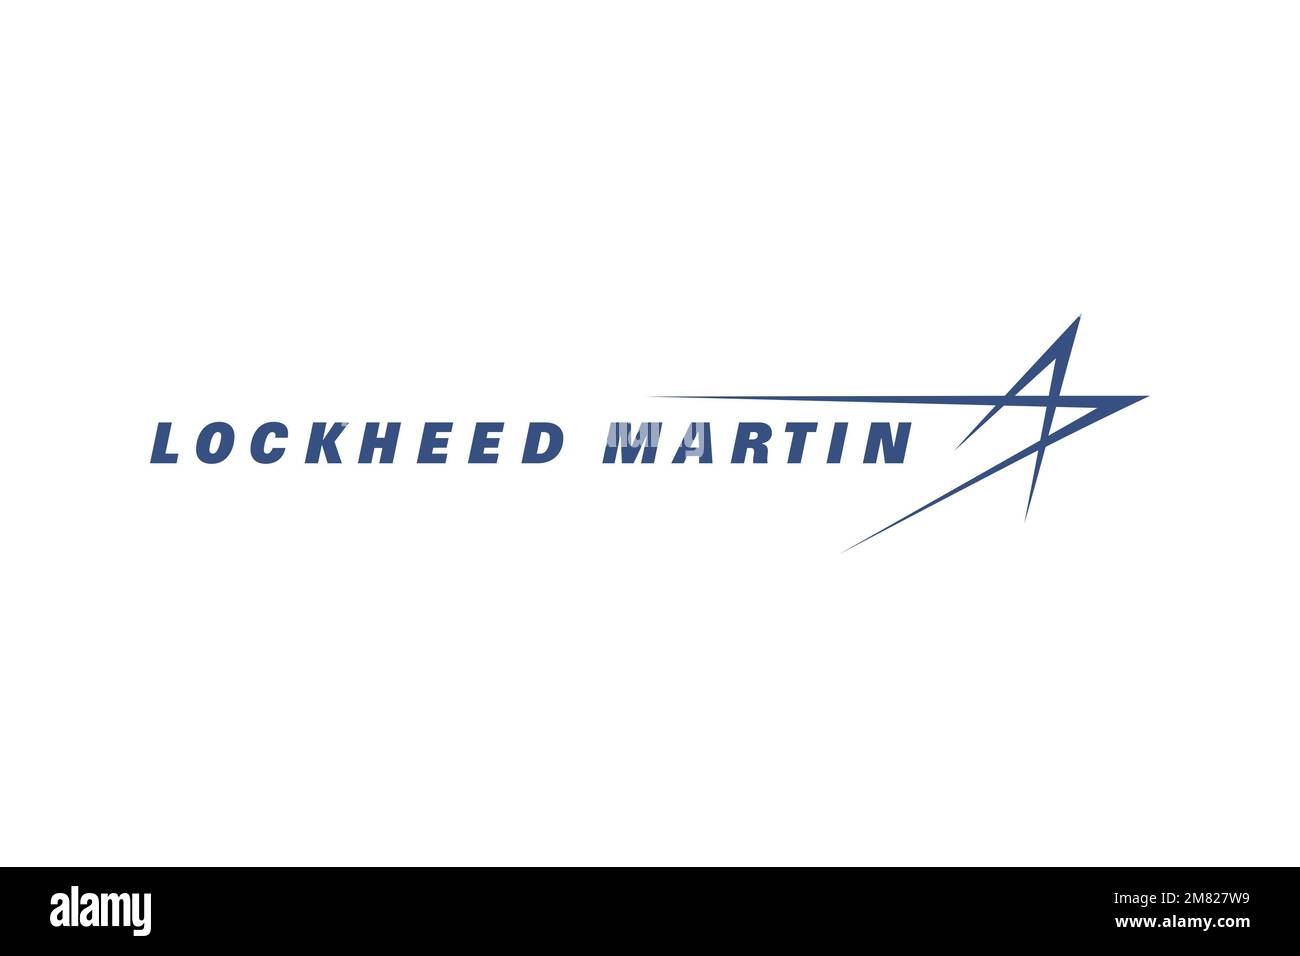 Lockheed Martin Aeronautics, logo, fond blanc Banque D'Images